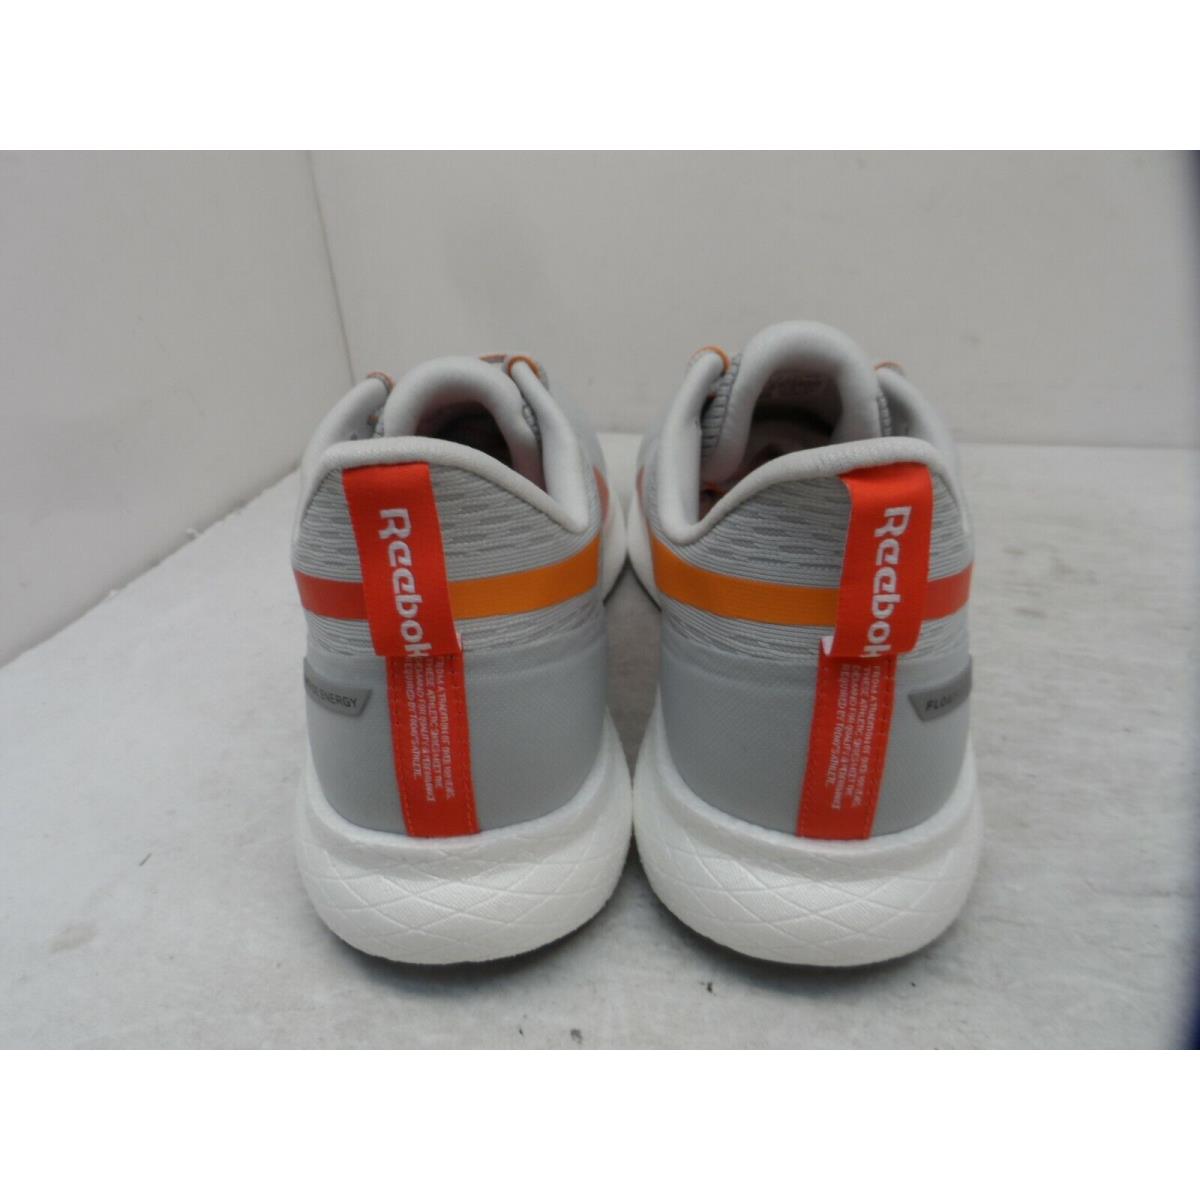 Reebok shoes Forever Floatride Energy - Grey/Orange/Red 1